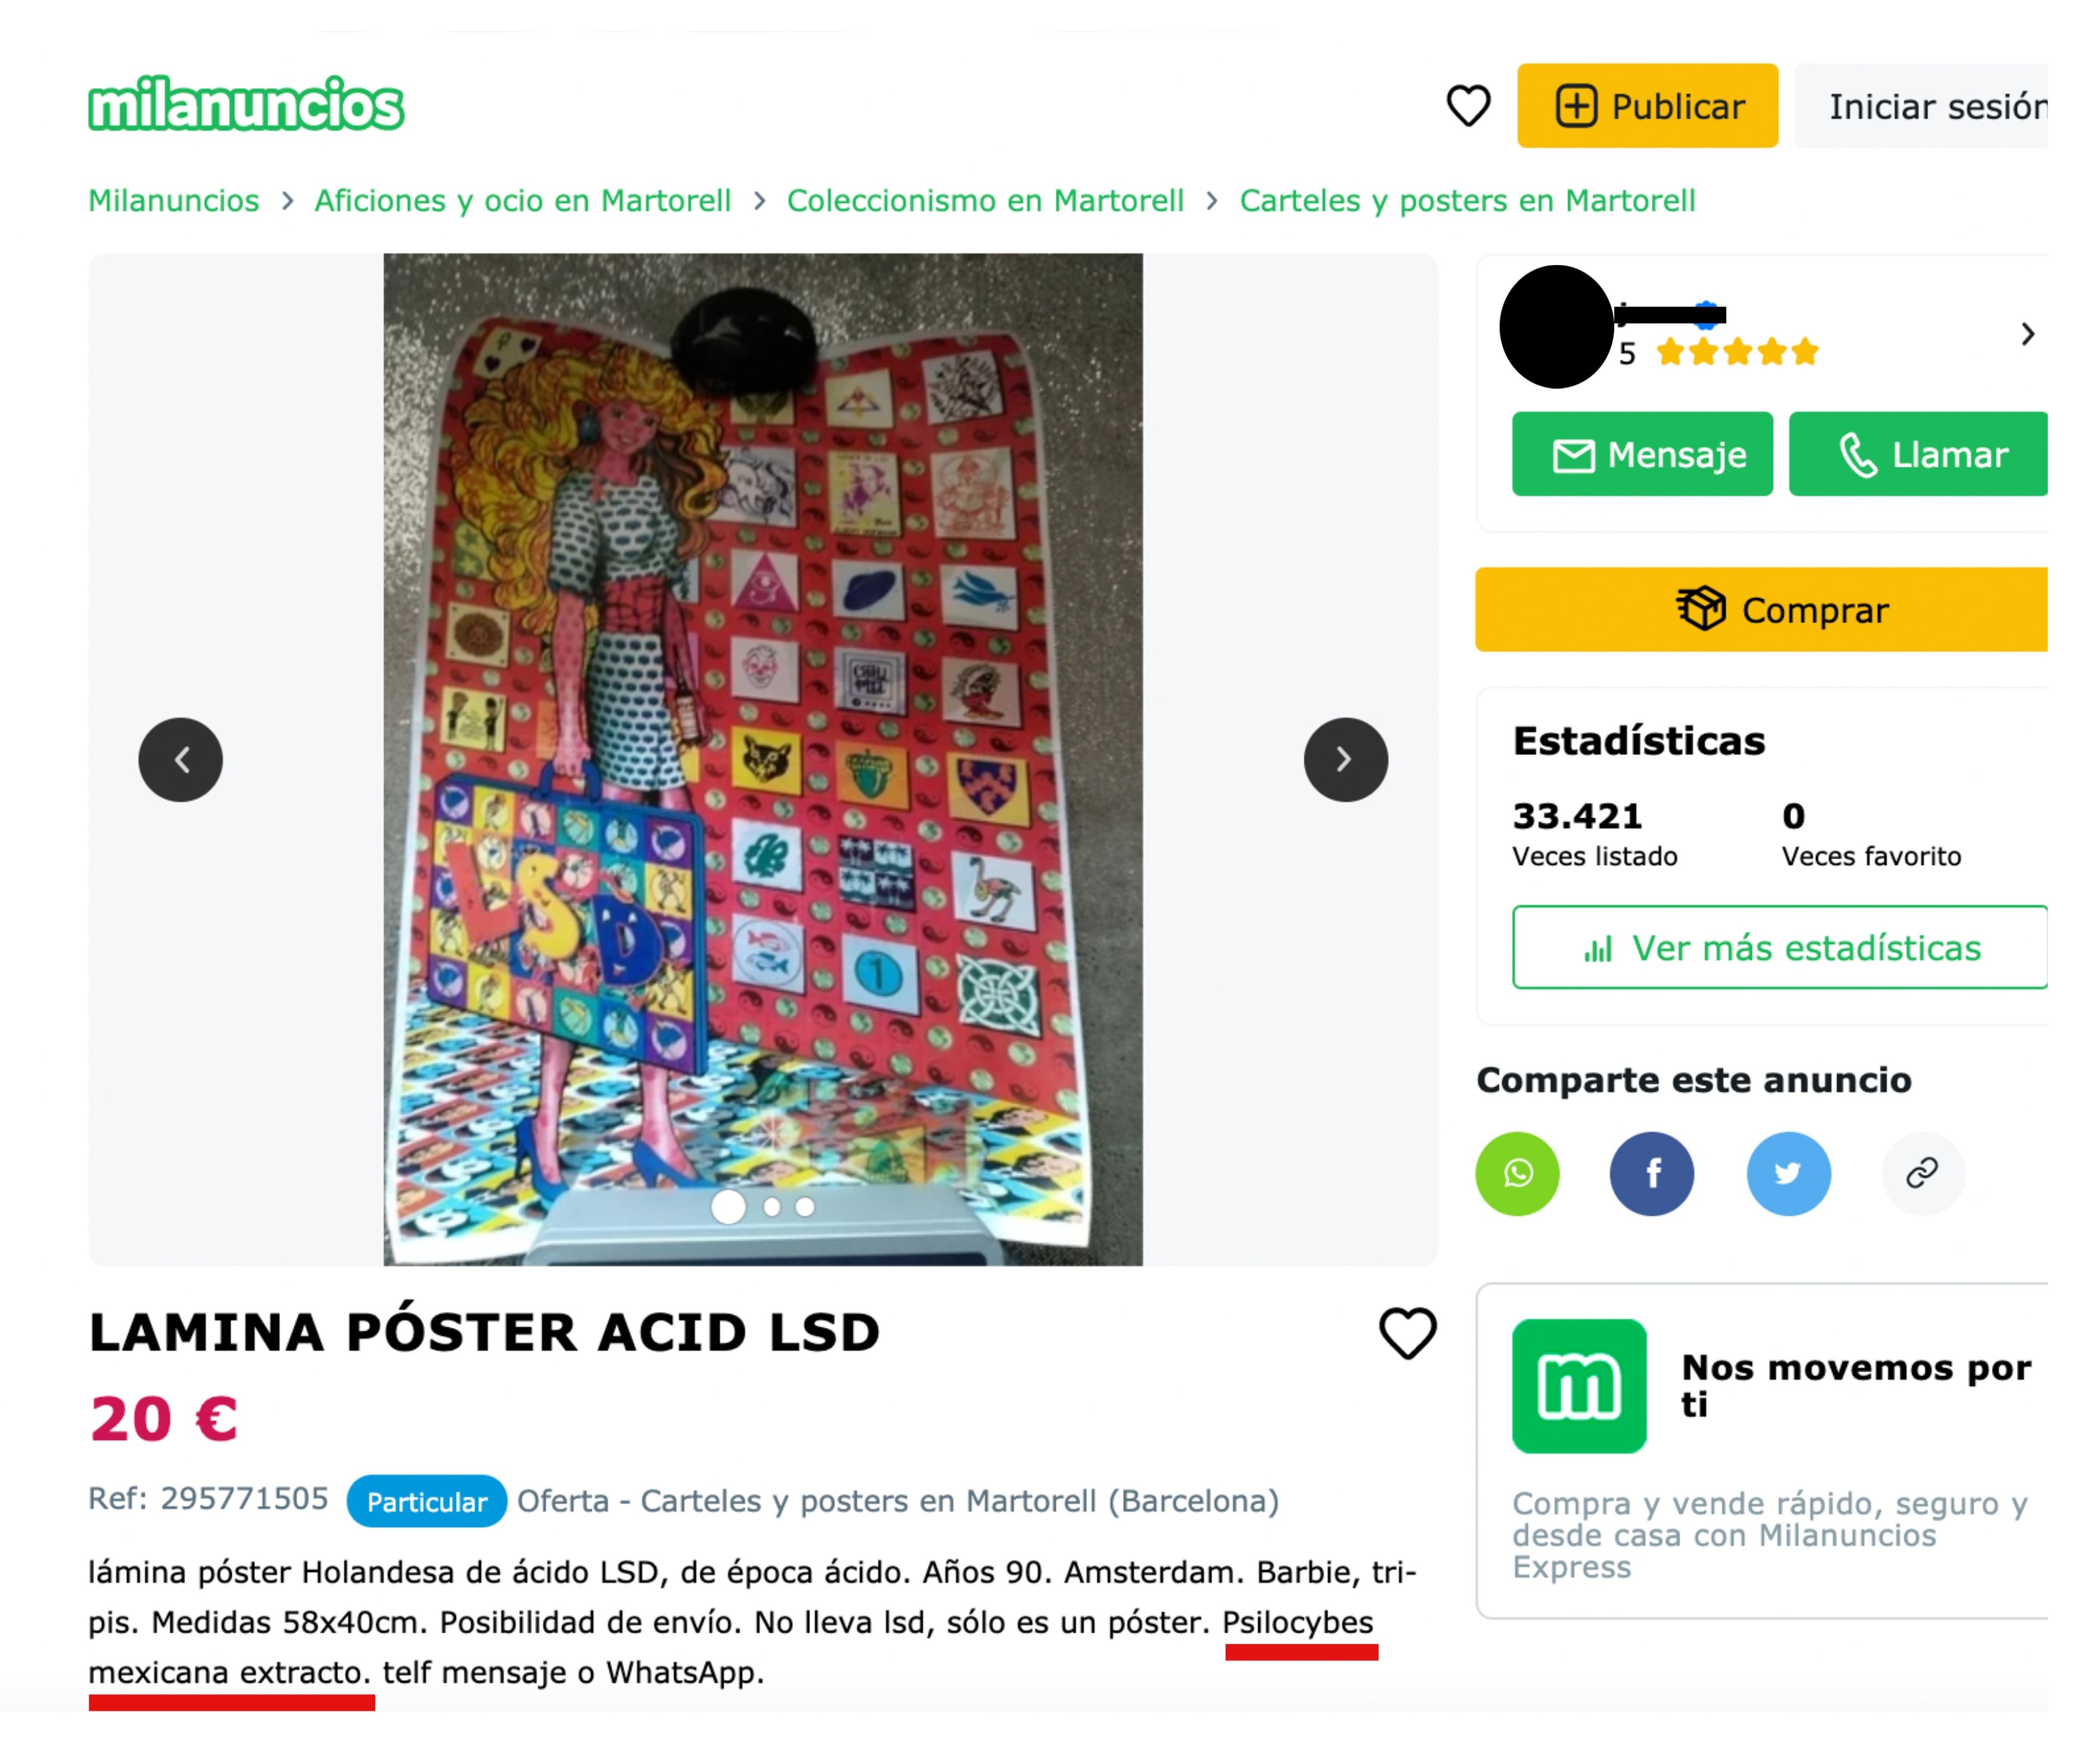 Se vende un póster con motivo de LSD, pero se anuncia otro tipo de droga alucinógena.